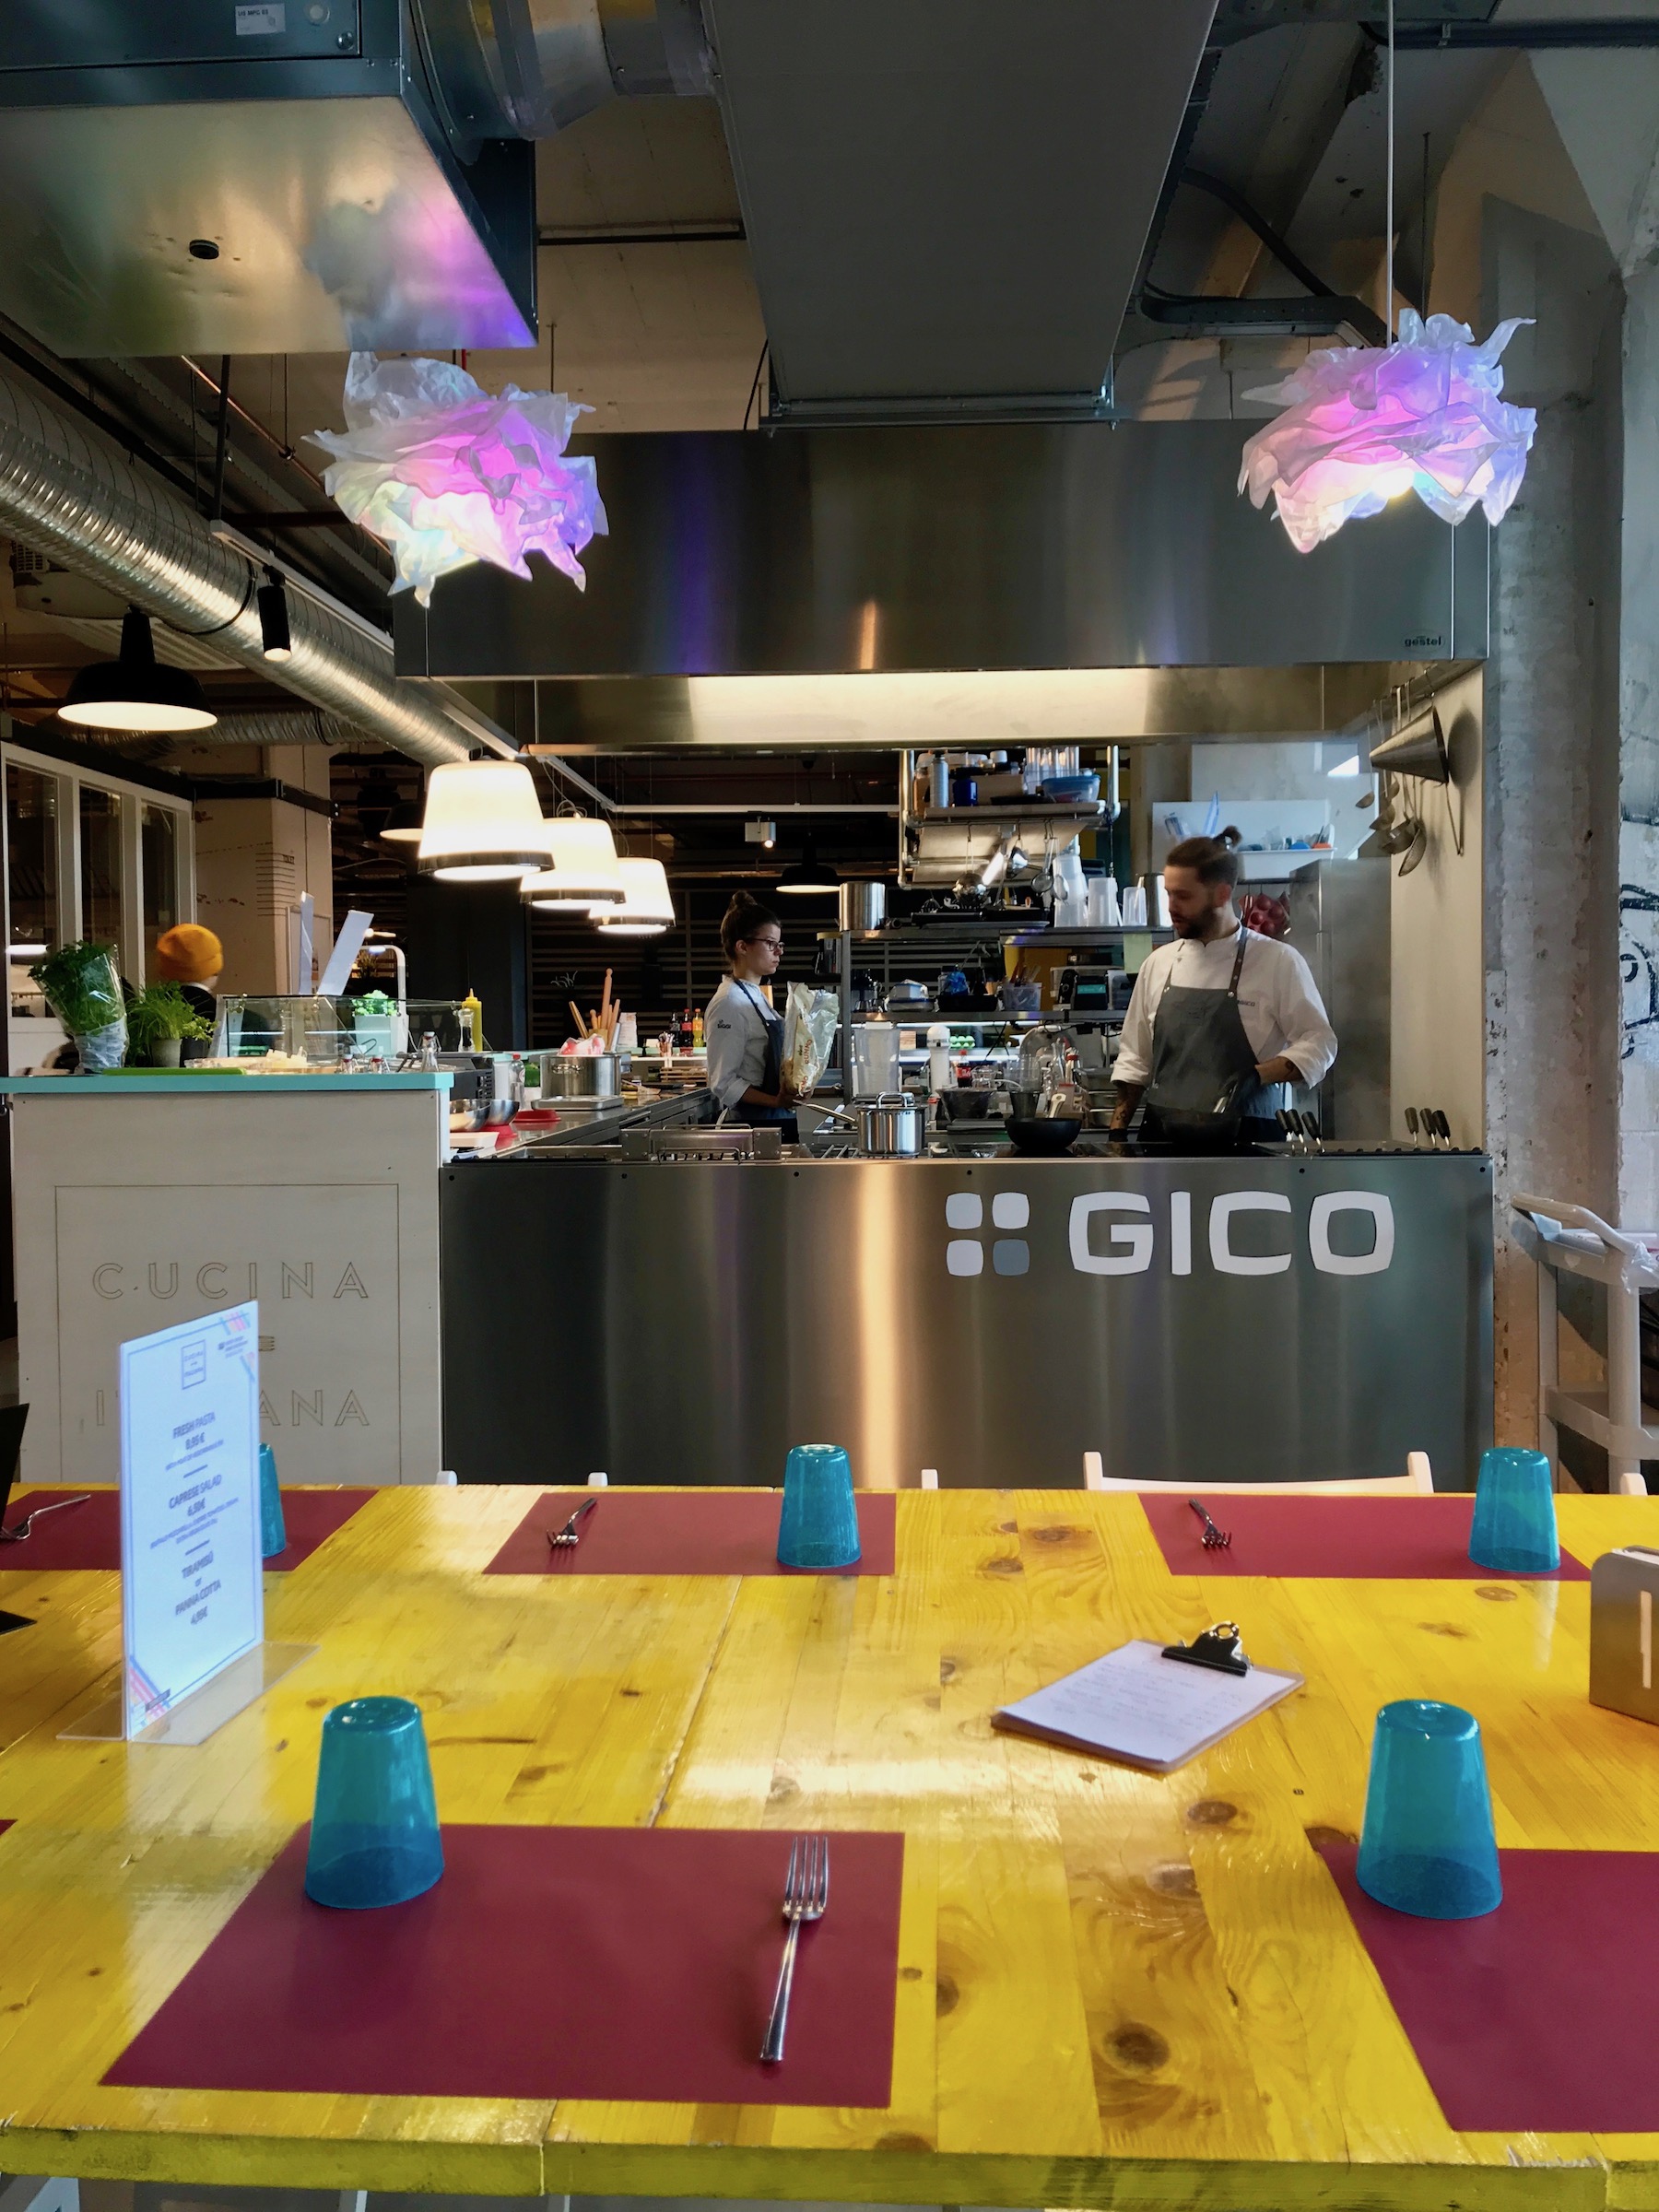 Dutch Design Week: GICO and CUCINA ITALIANA transform food into art